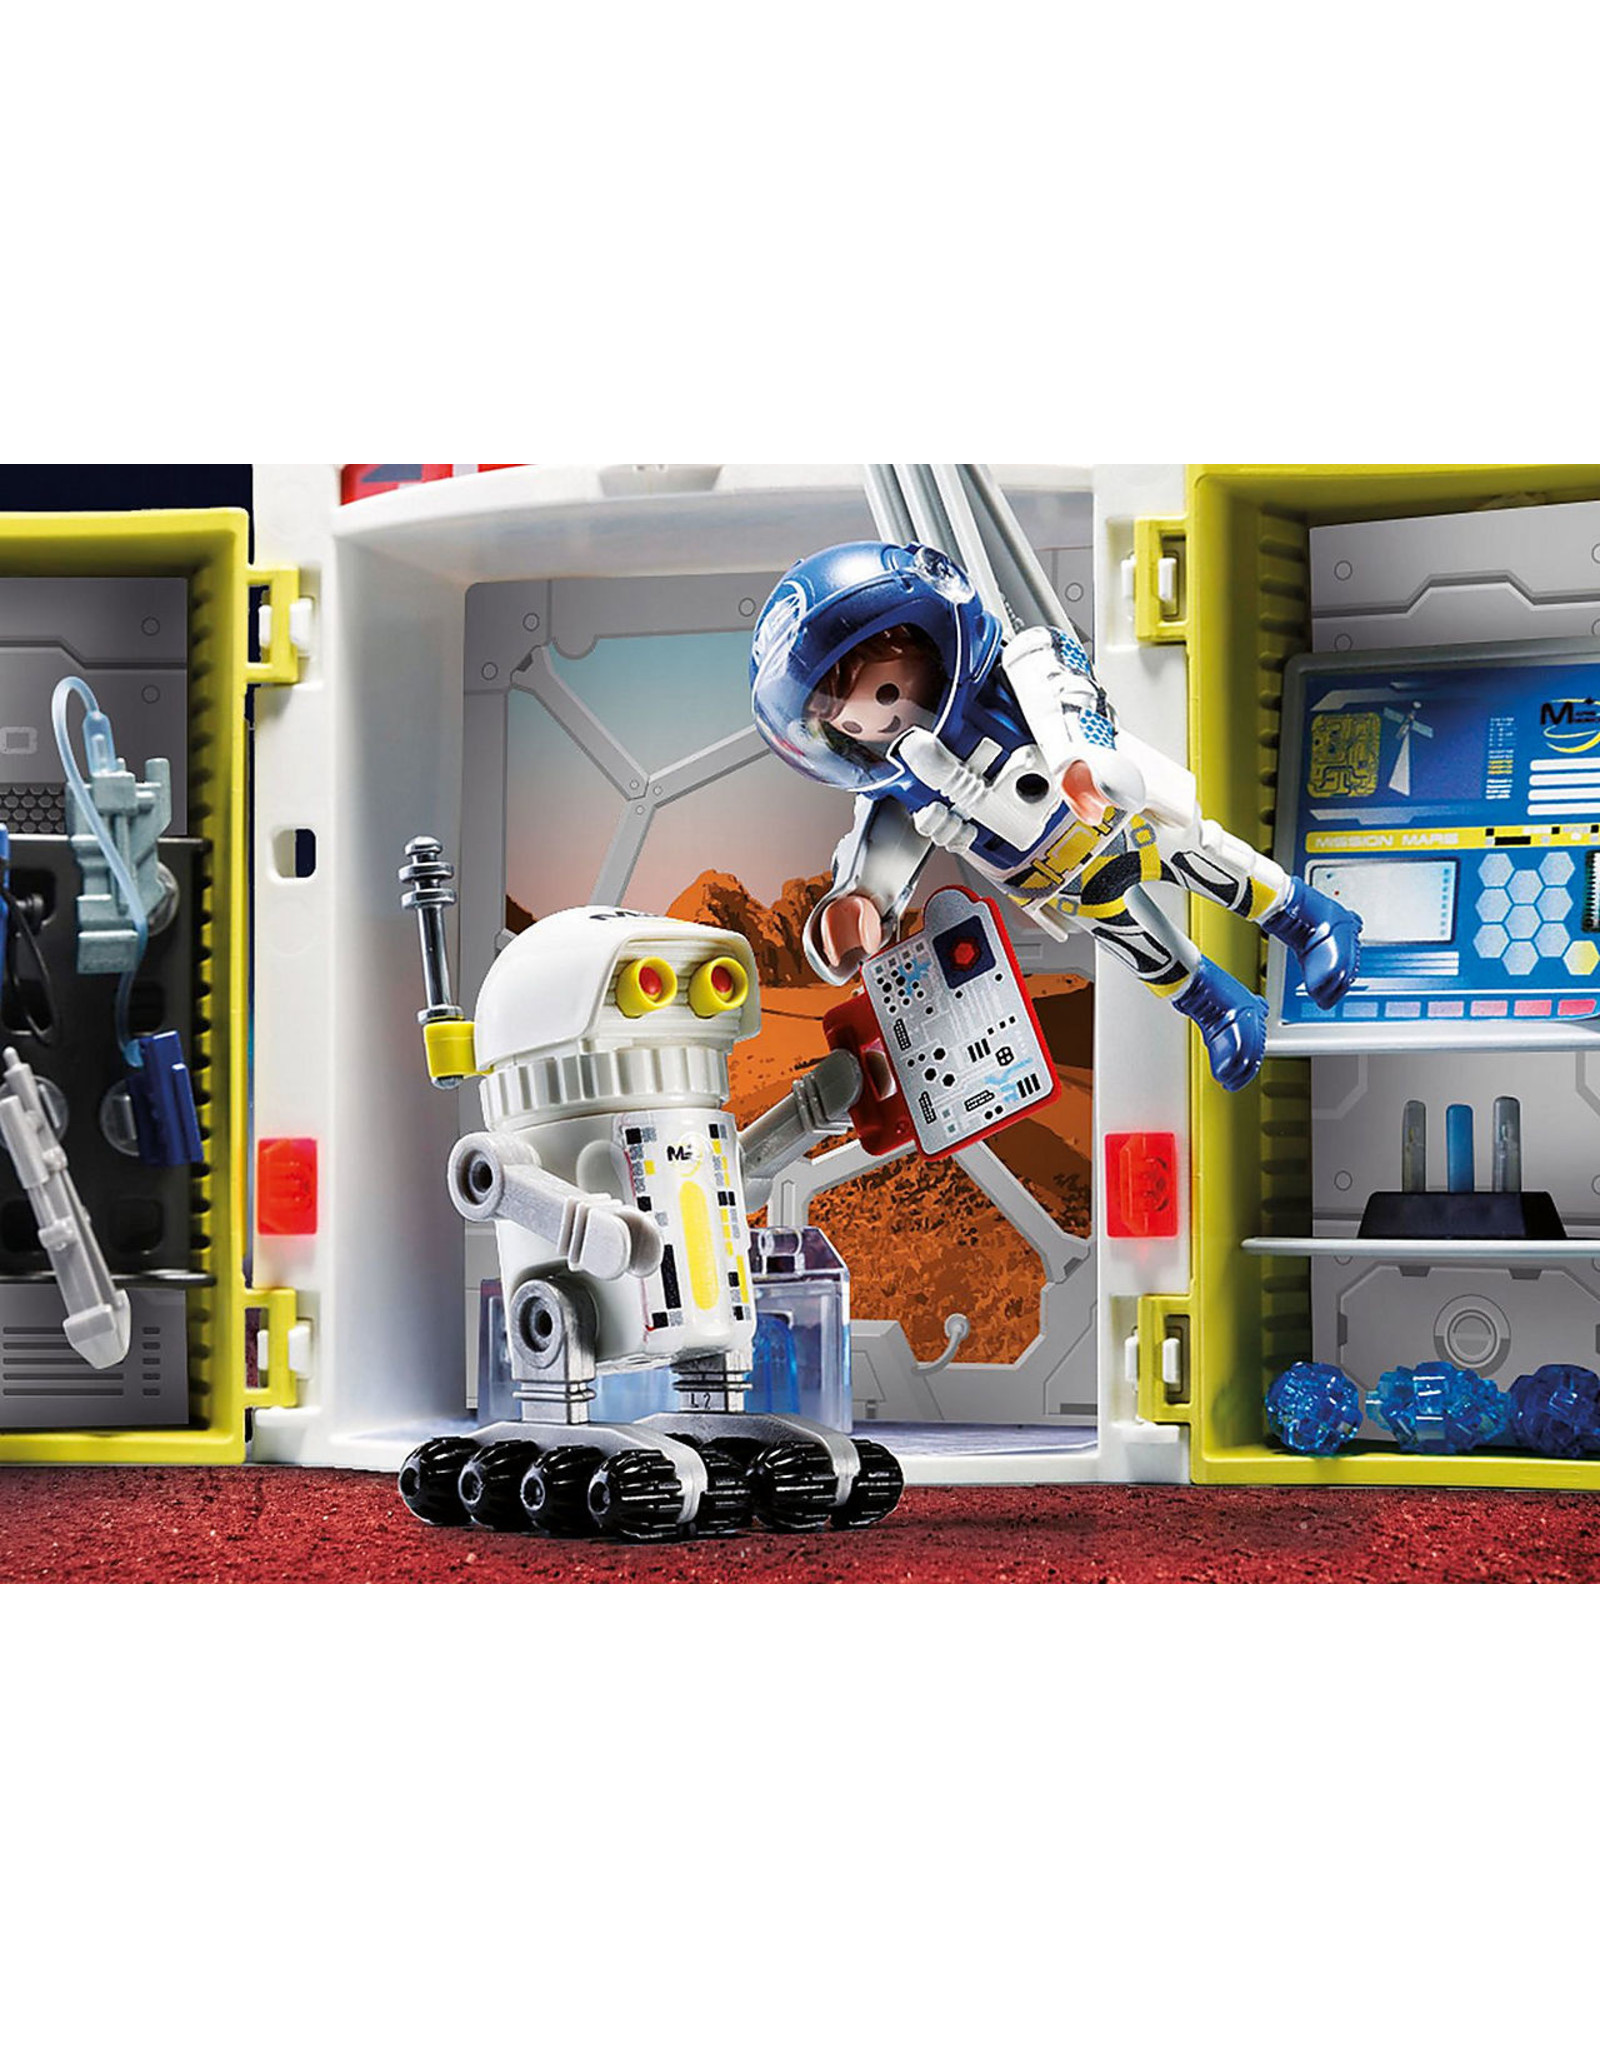 Playmobil Playmobil Space Lab Play Box